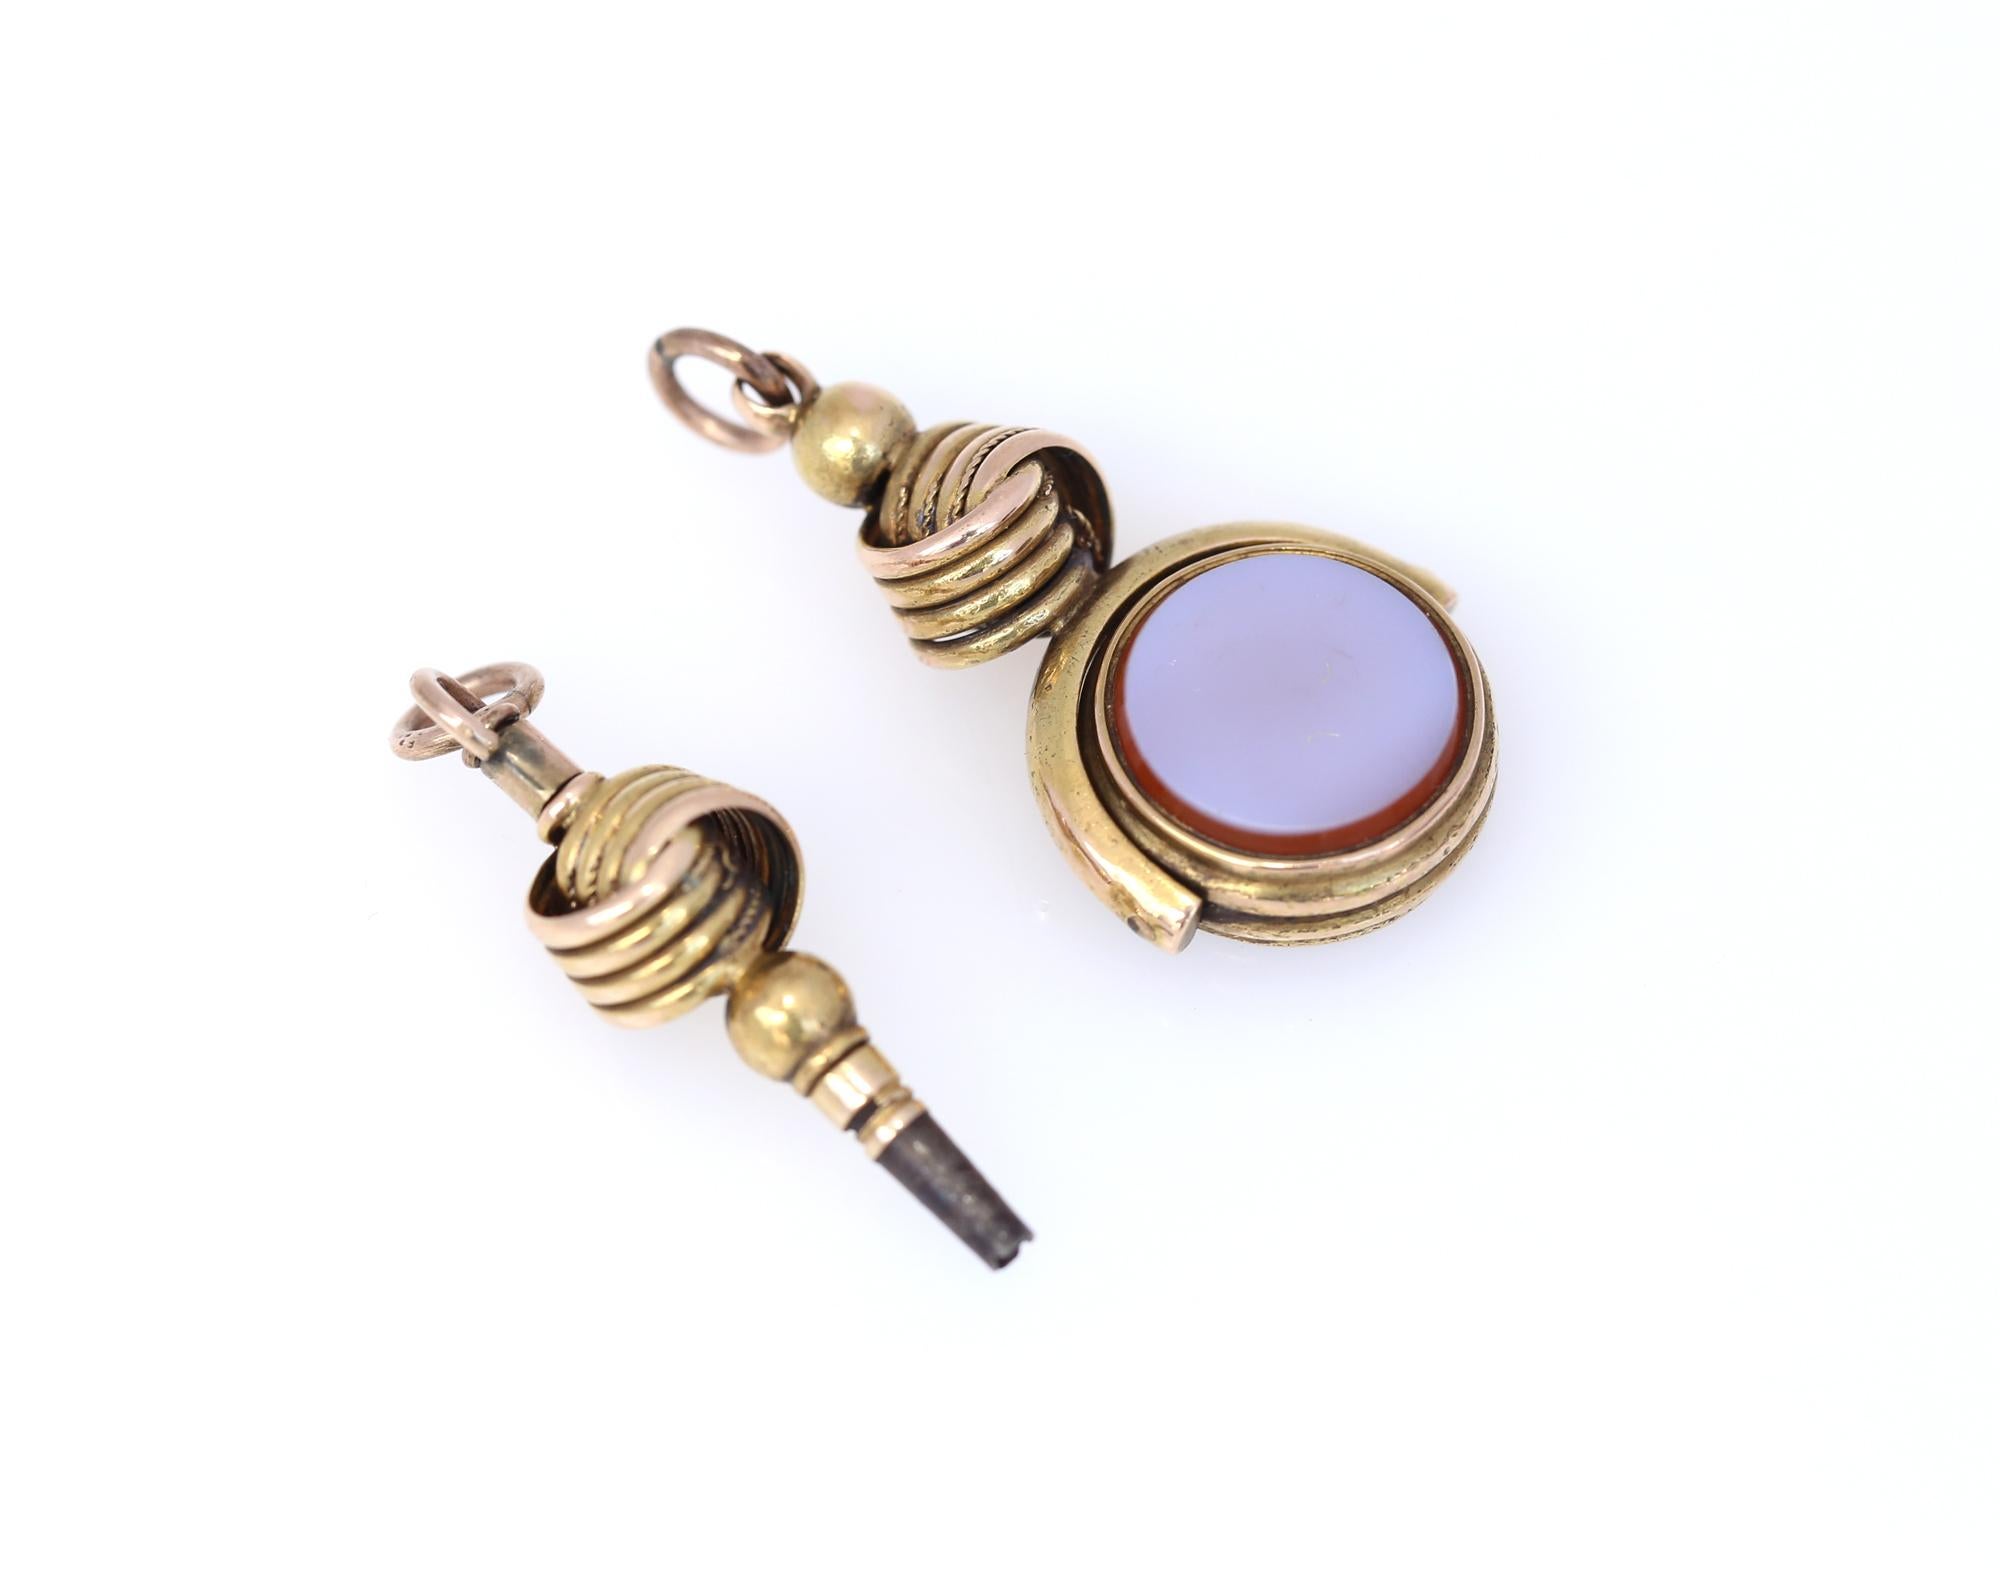 Art Nouveau Cornelian Swivel Fob Watch Key 14 Karat Gold Set for Charm Bracelet 19th Century